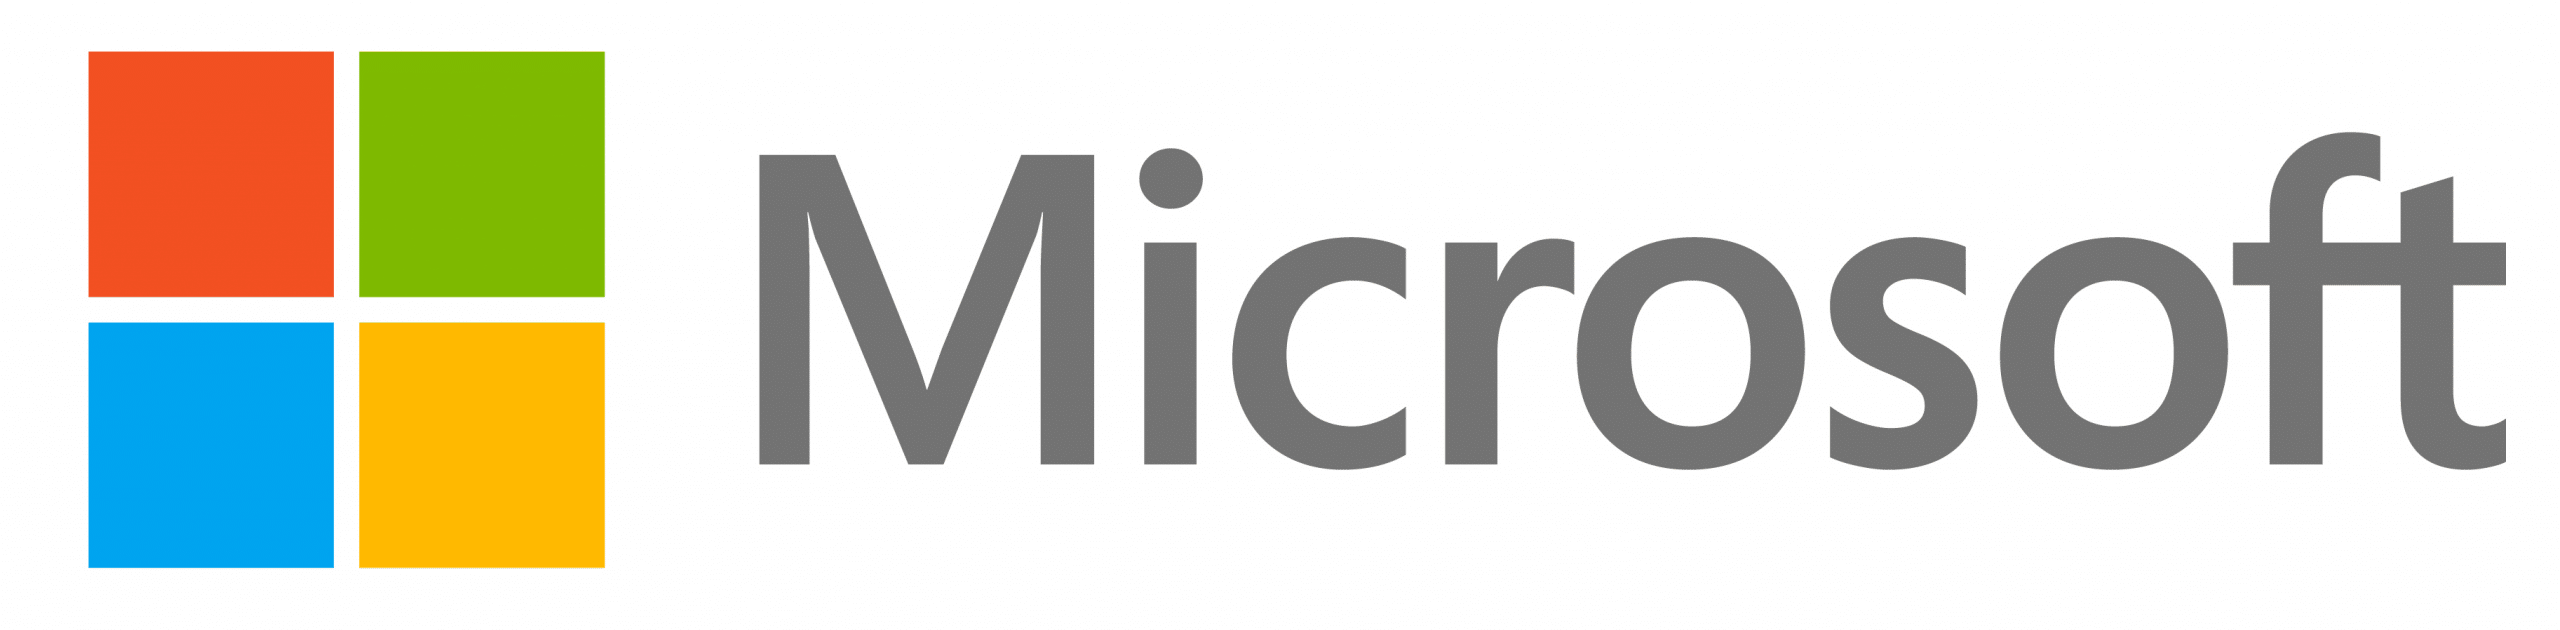 Image result for microsoft logo